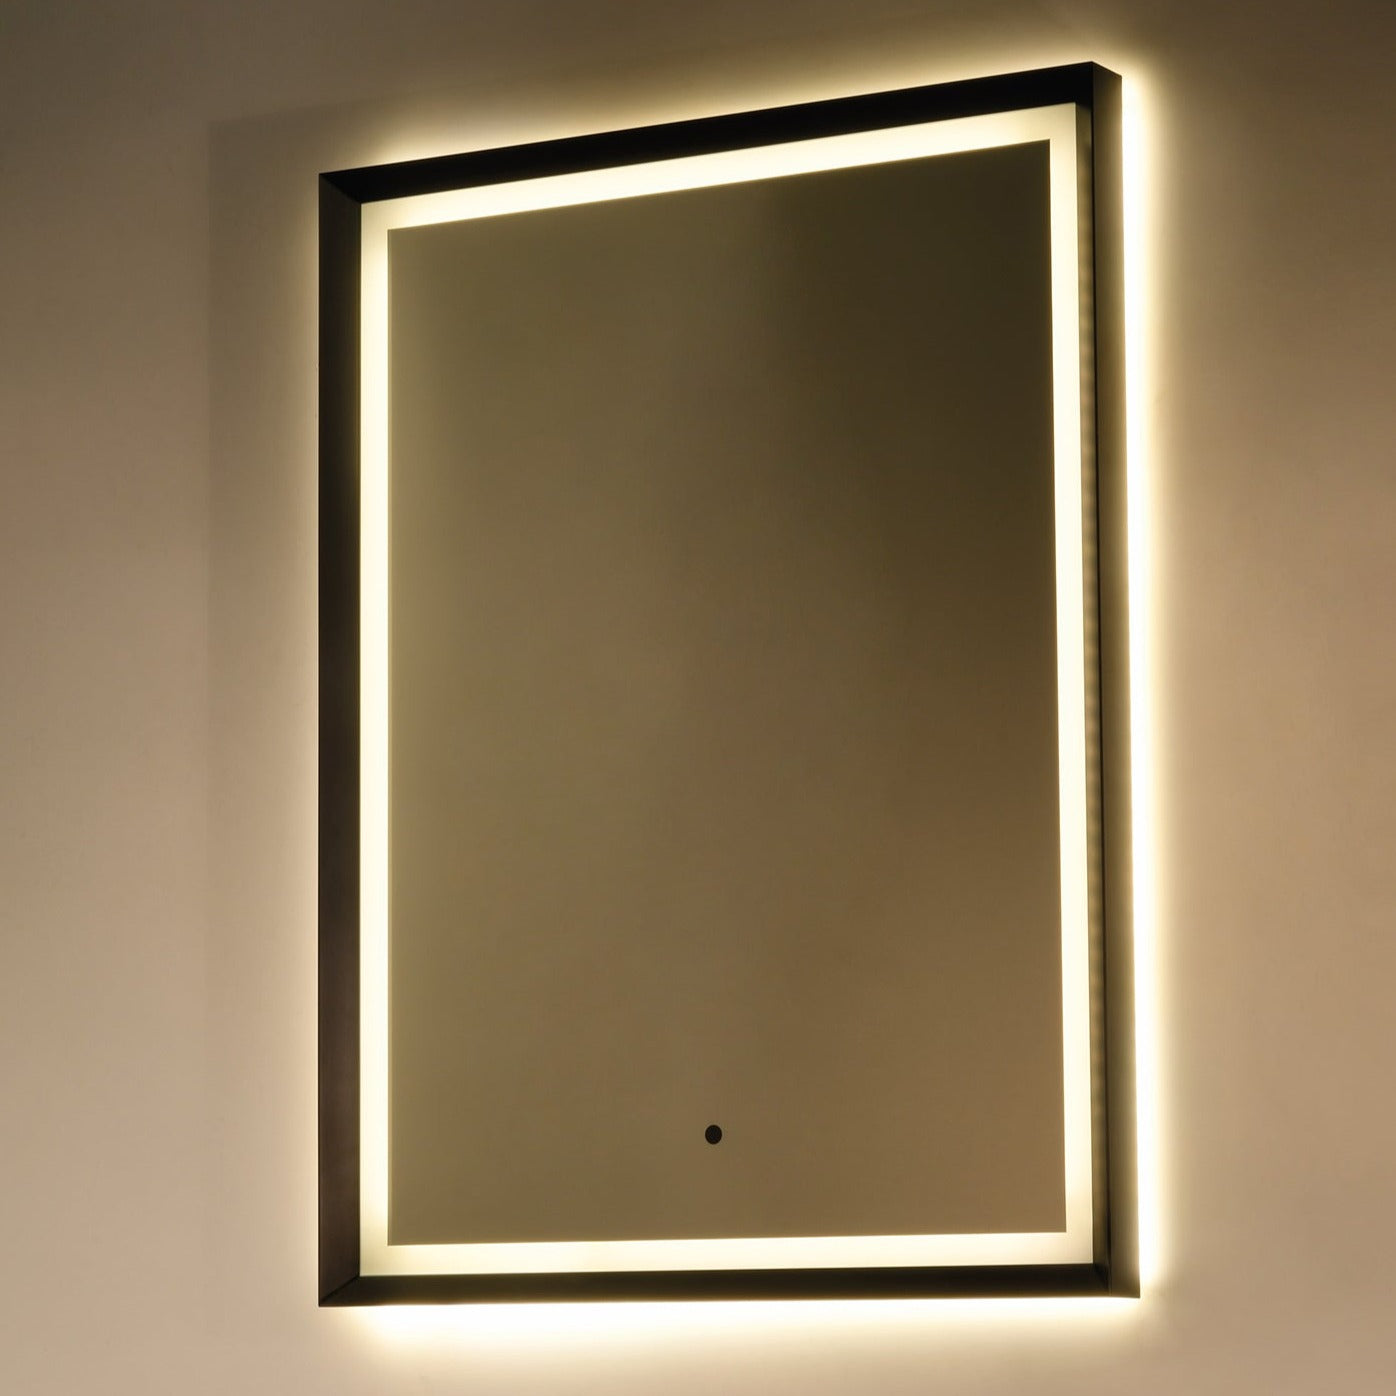 Oxygen Dusk 3-0801-15 Lighted LED Vanity Mirror 18x24 Inch - Black